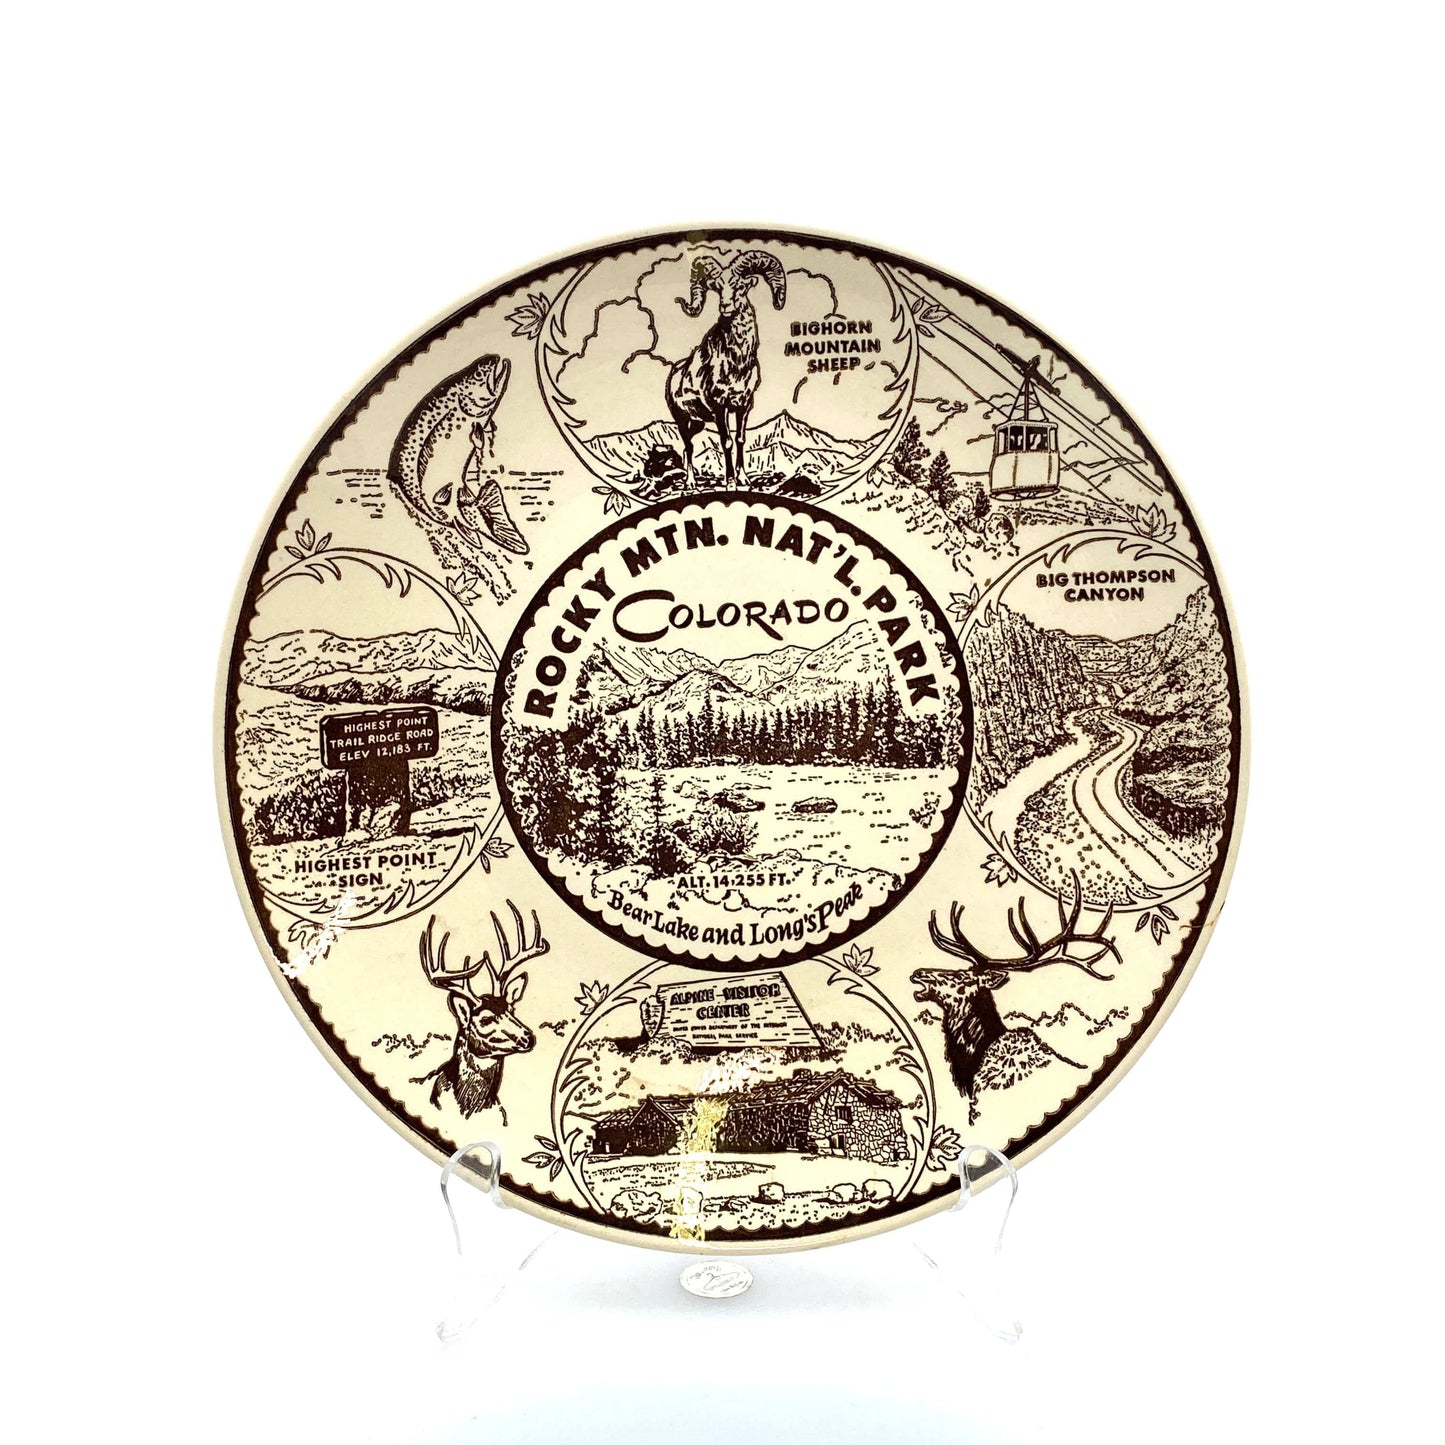 Vintage State Souvenir Plate “Rocky Mountain Nat’l Park” Collectible, White - 10.”